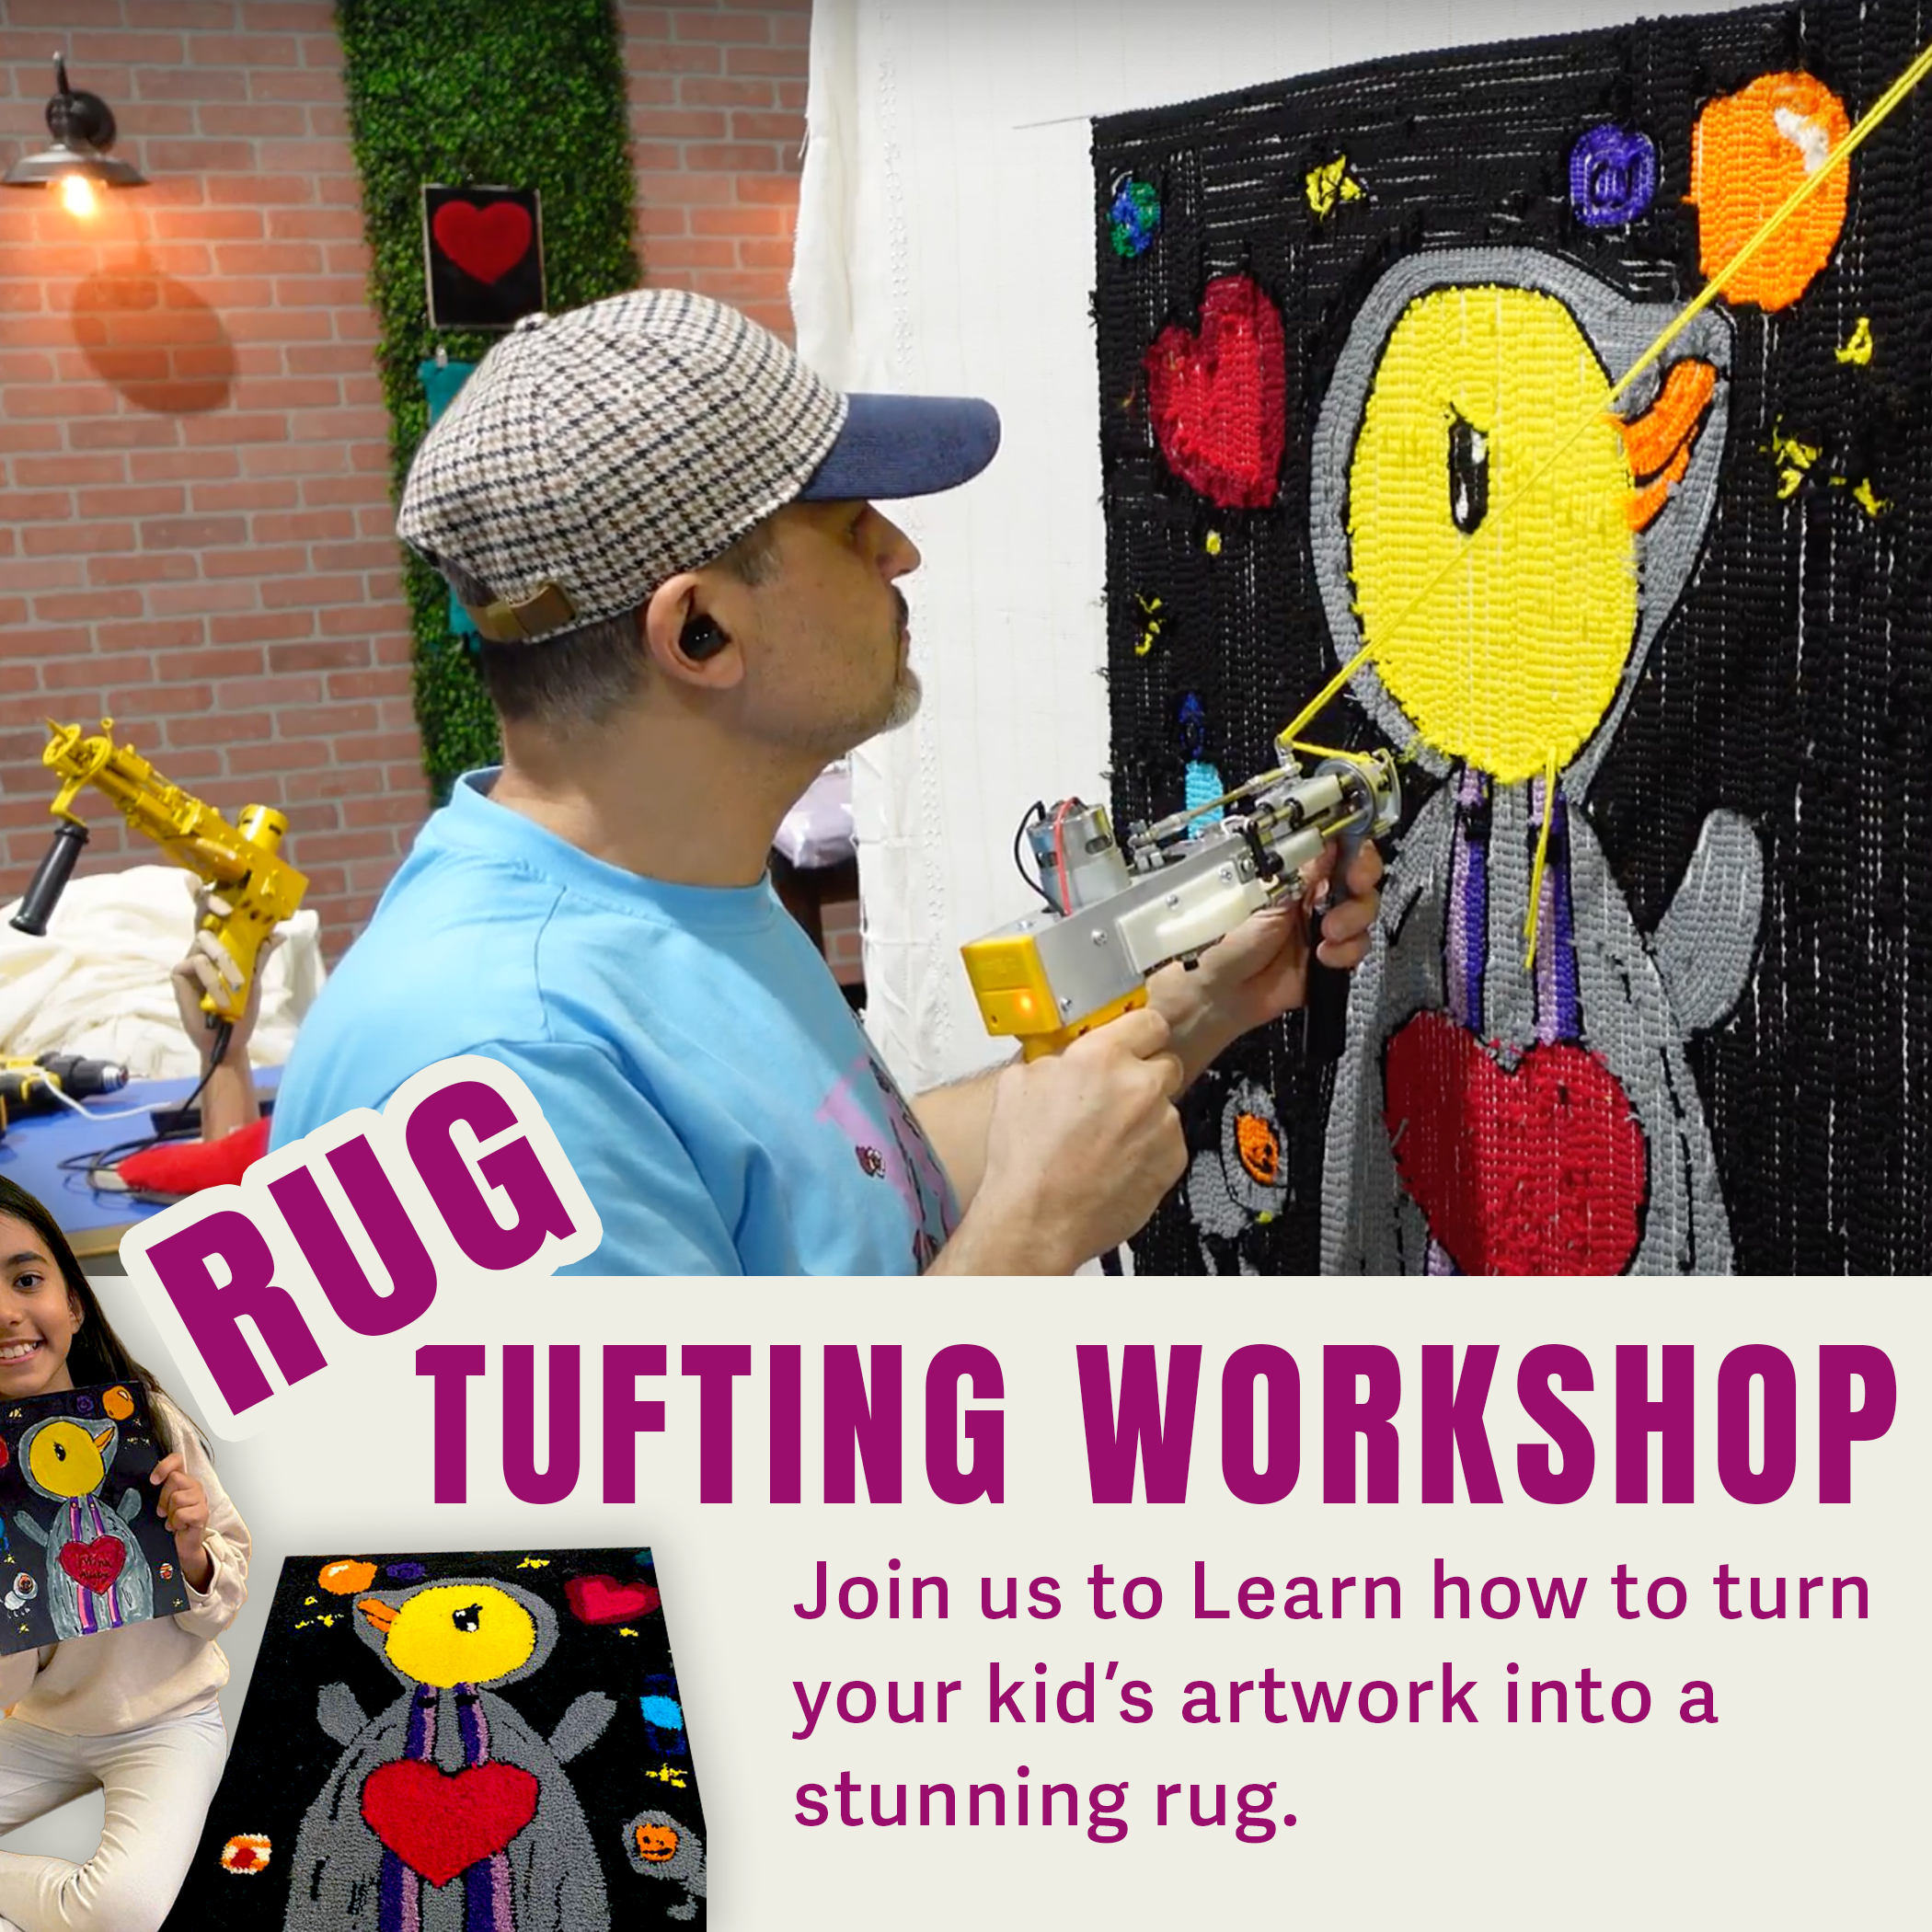 Rug Tufting Workshop